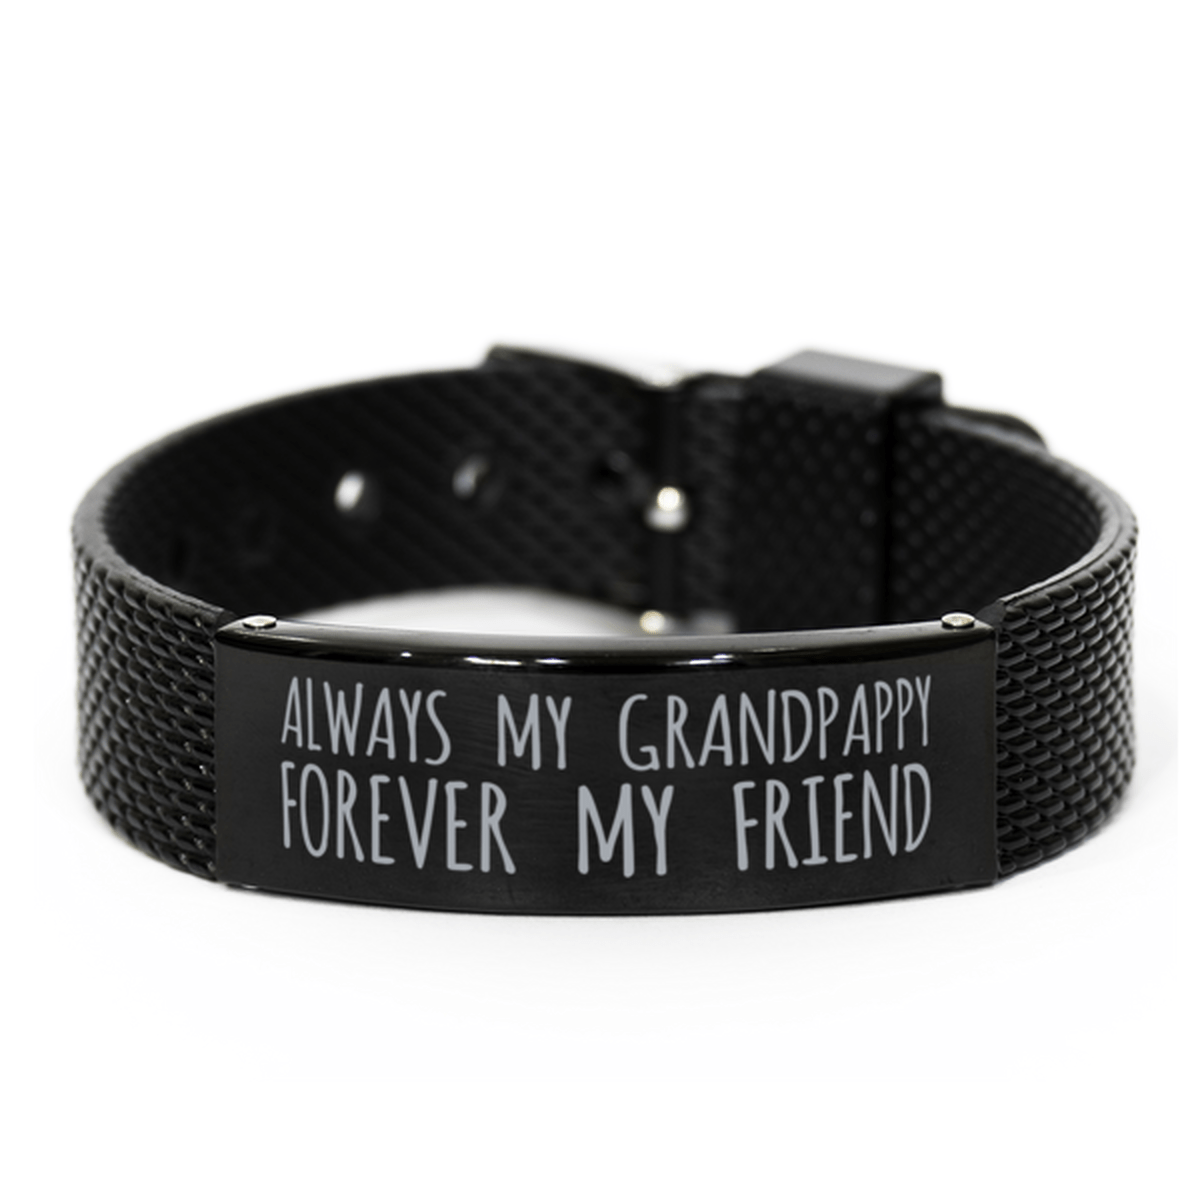 Inspirational Grandpappy Black Shark Mesh Bracelet, Always My Grandpappy Forever My Friend, Best Birthday Gifts for Family Friends